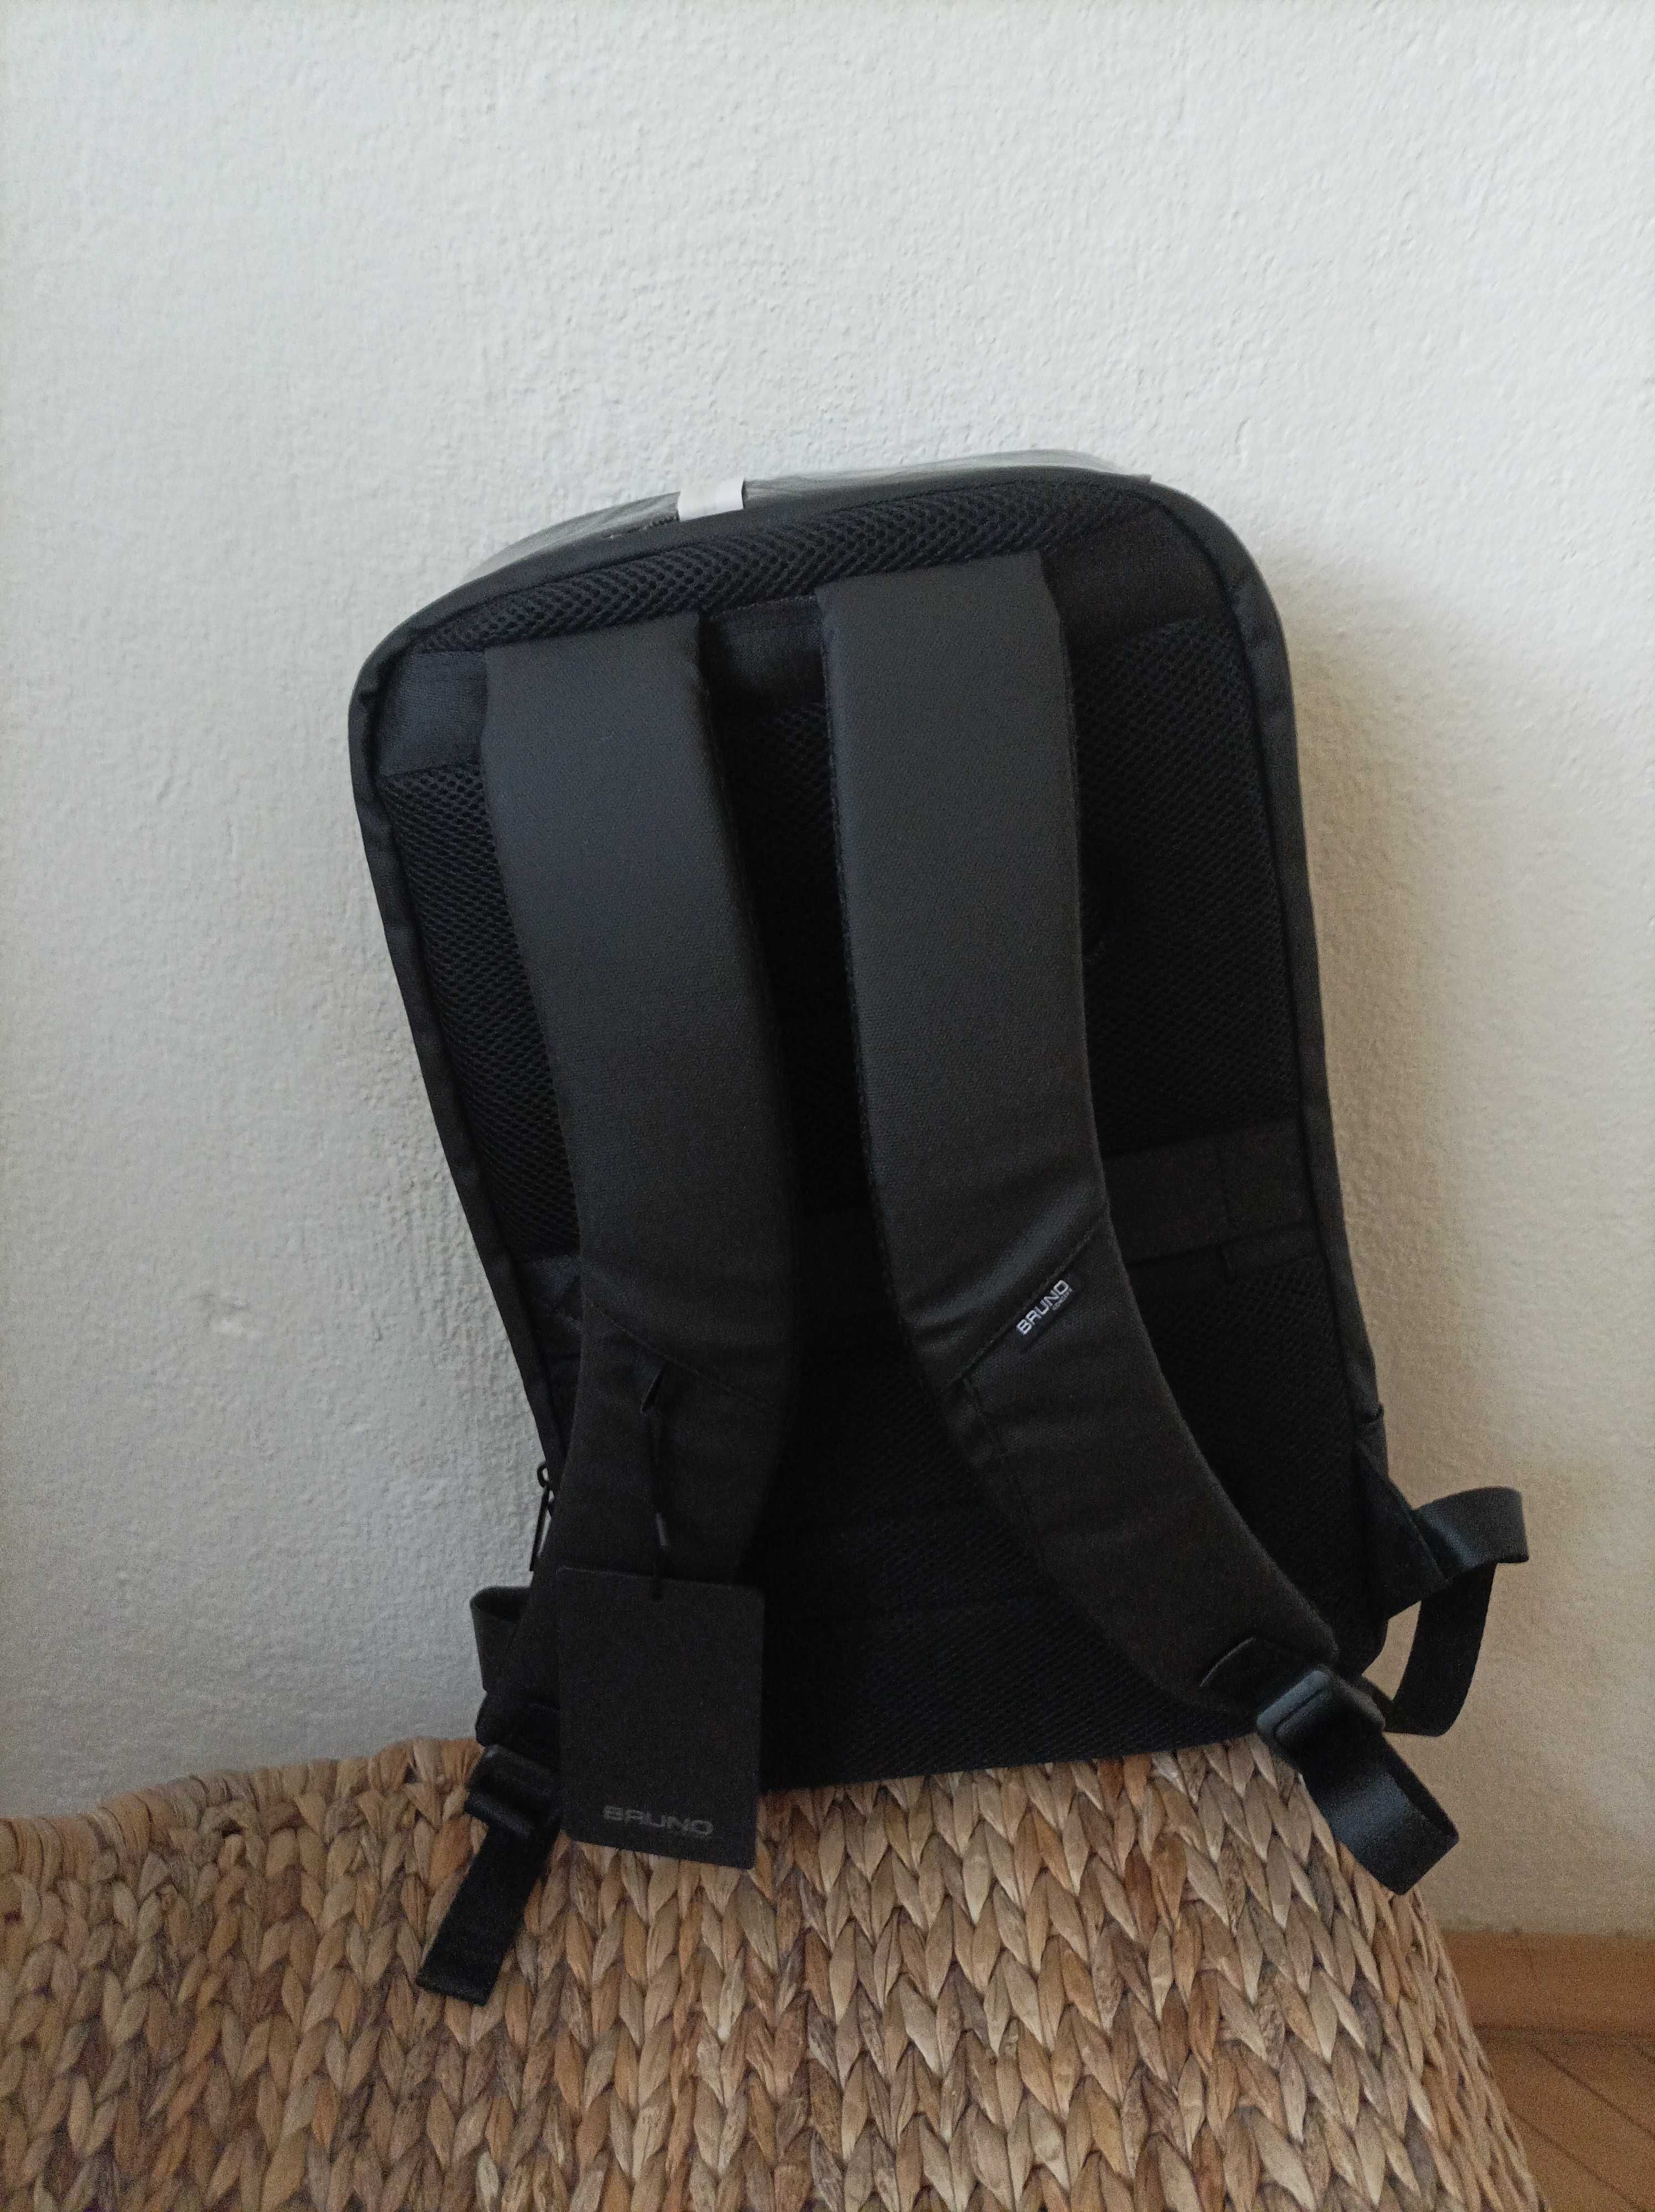 Бизнез раница Magnum 34.430.10 MAGNUM - Anti-theft business backpack